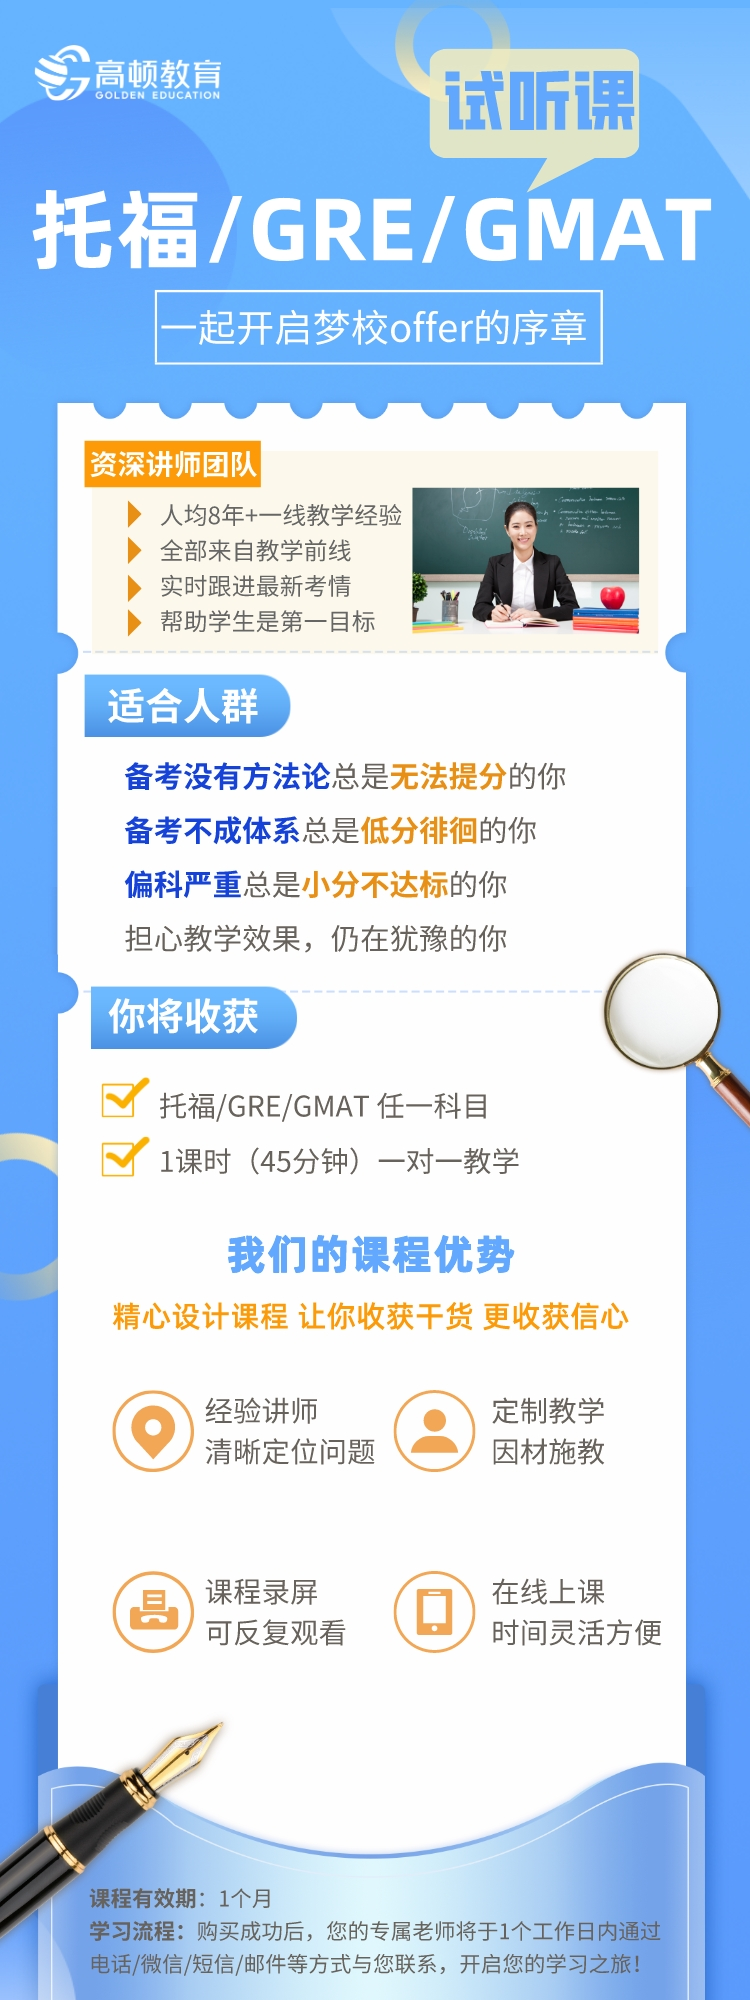 http://simg01.gaodunwangxiao.com/uploadfiles/product-center/202406/14/fc859_20240614100002.png